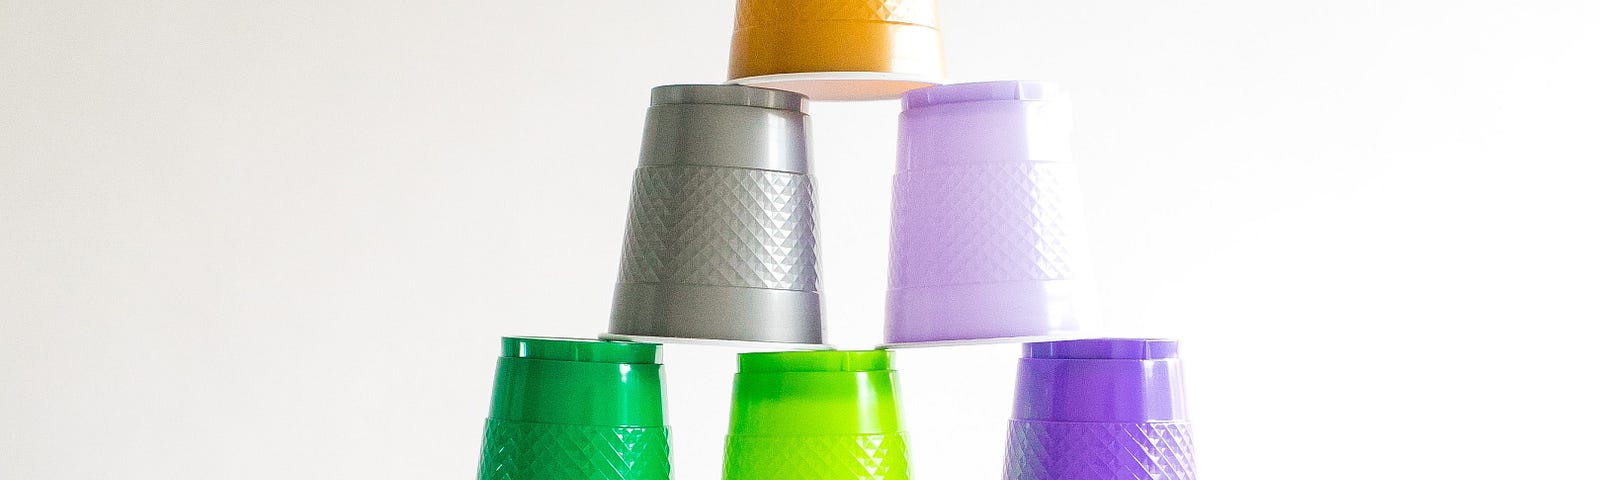 Batch of plastic cups